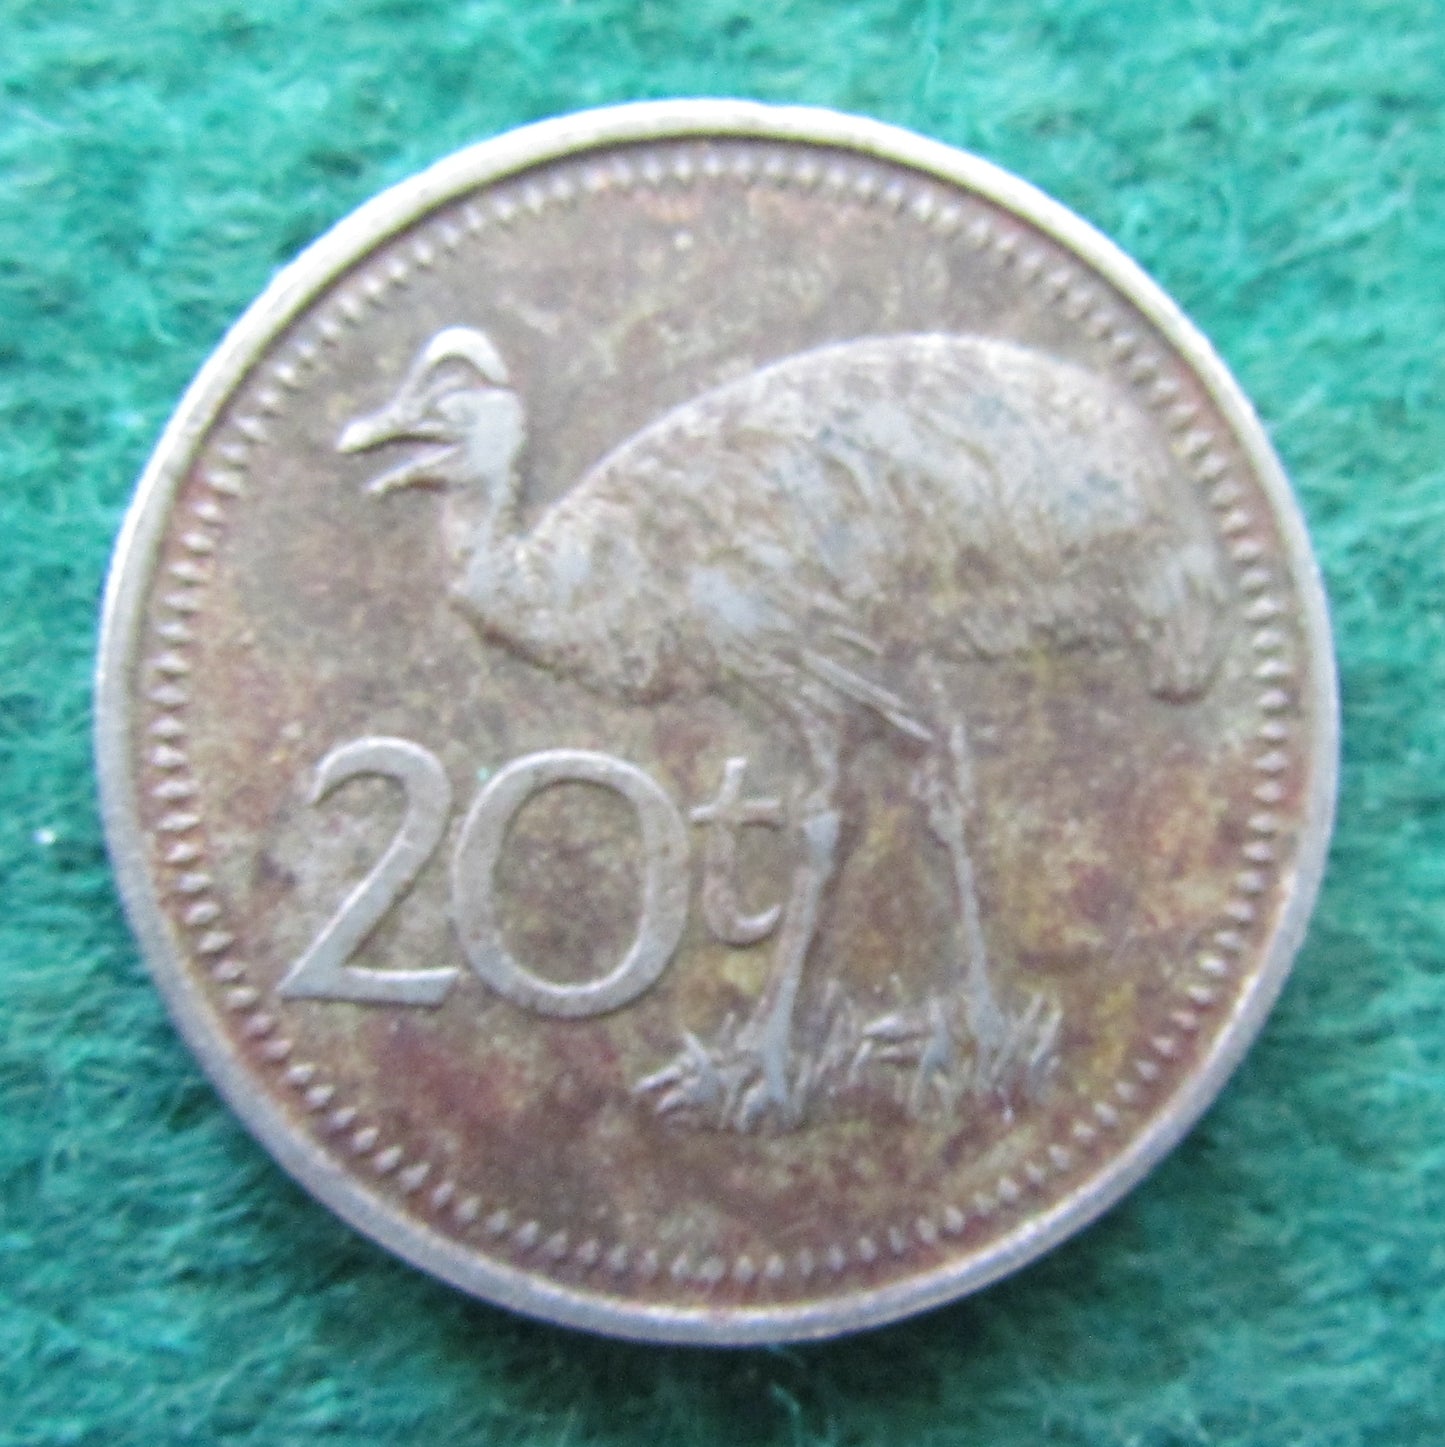 New Guinea 1990 20 Toea Coin - Circulated